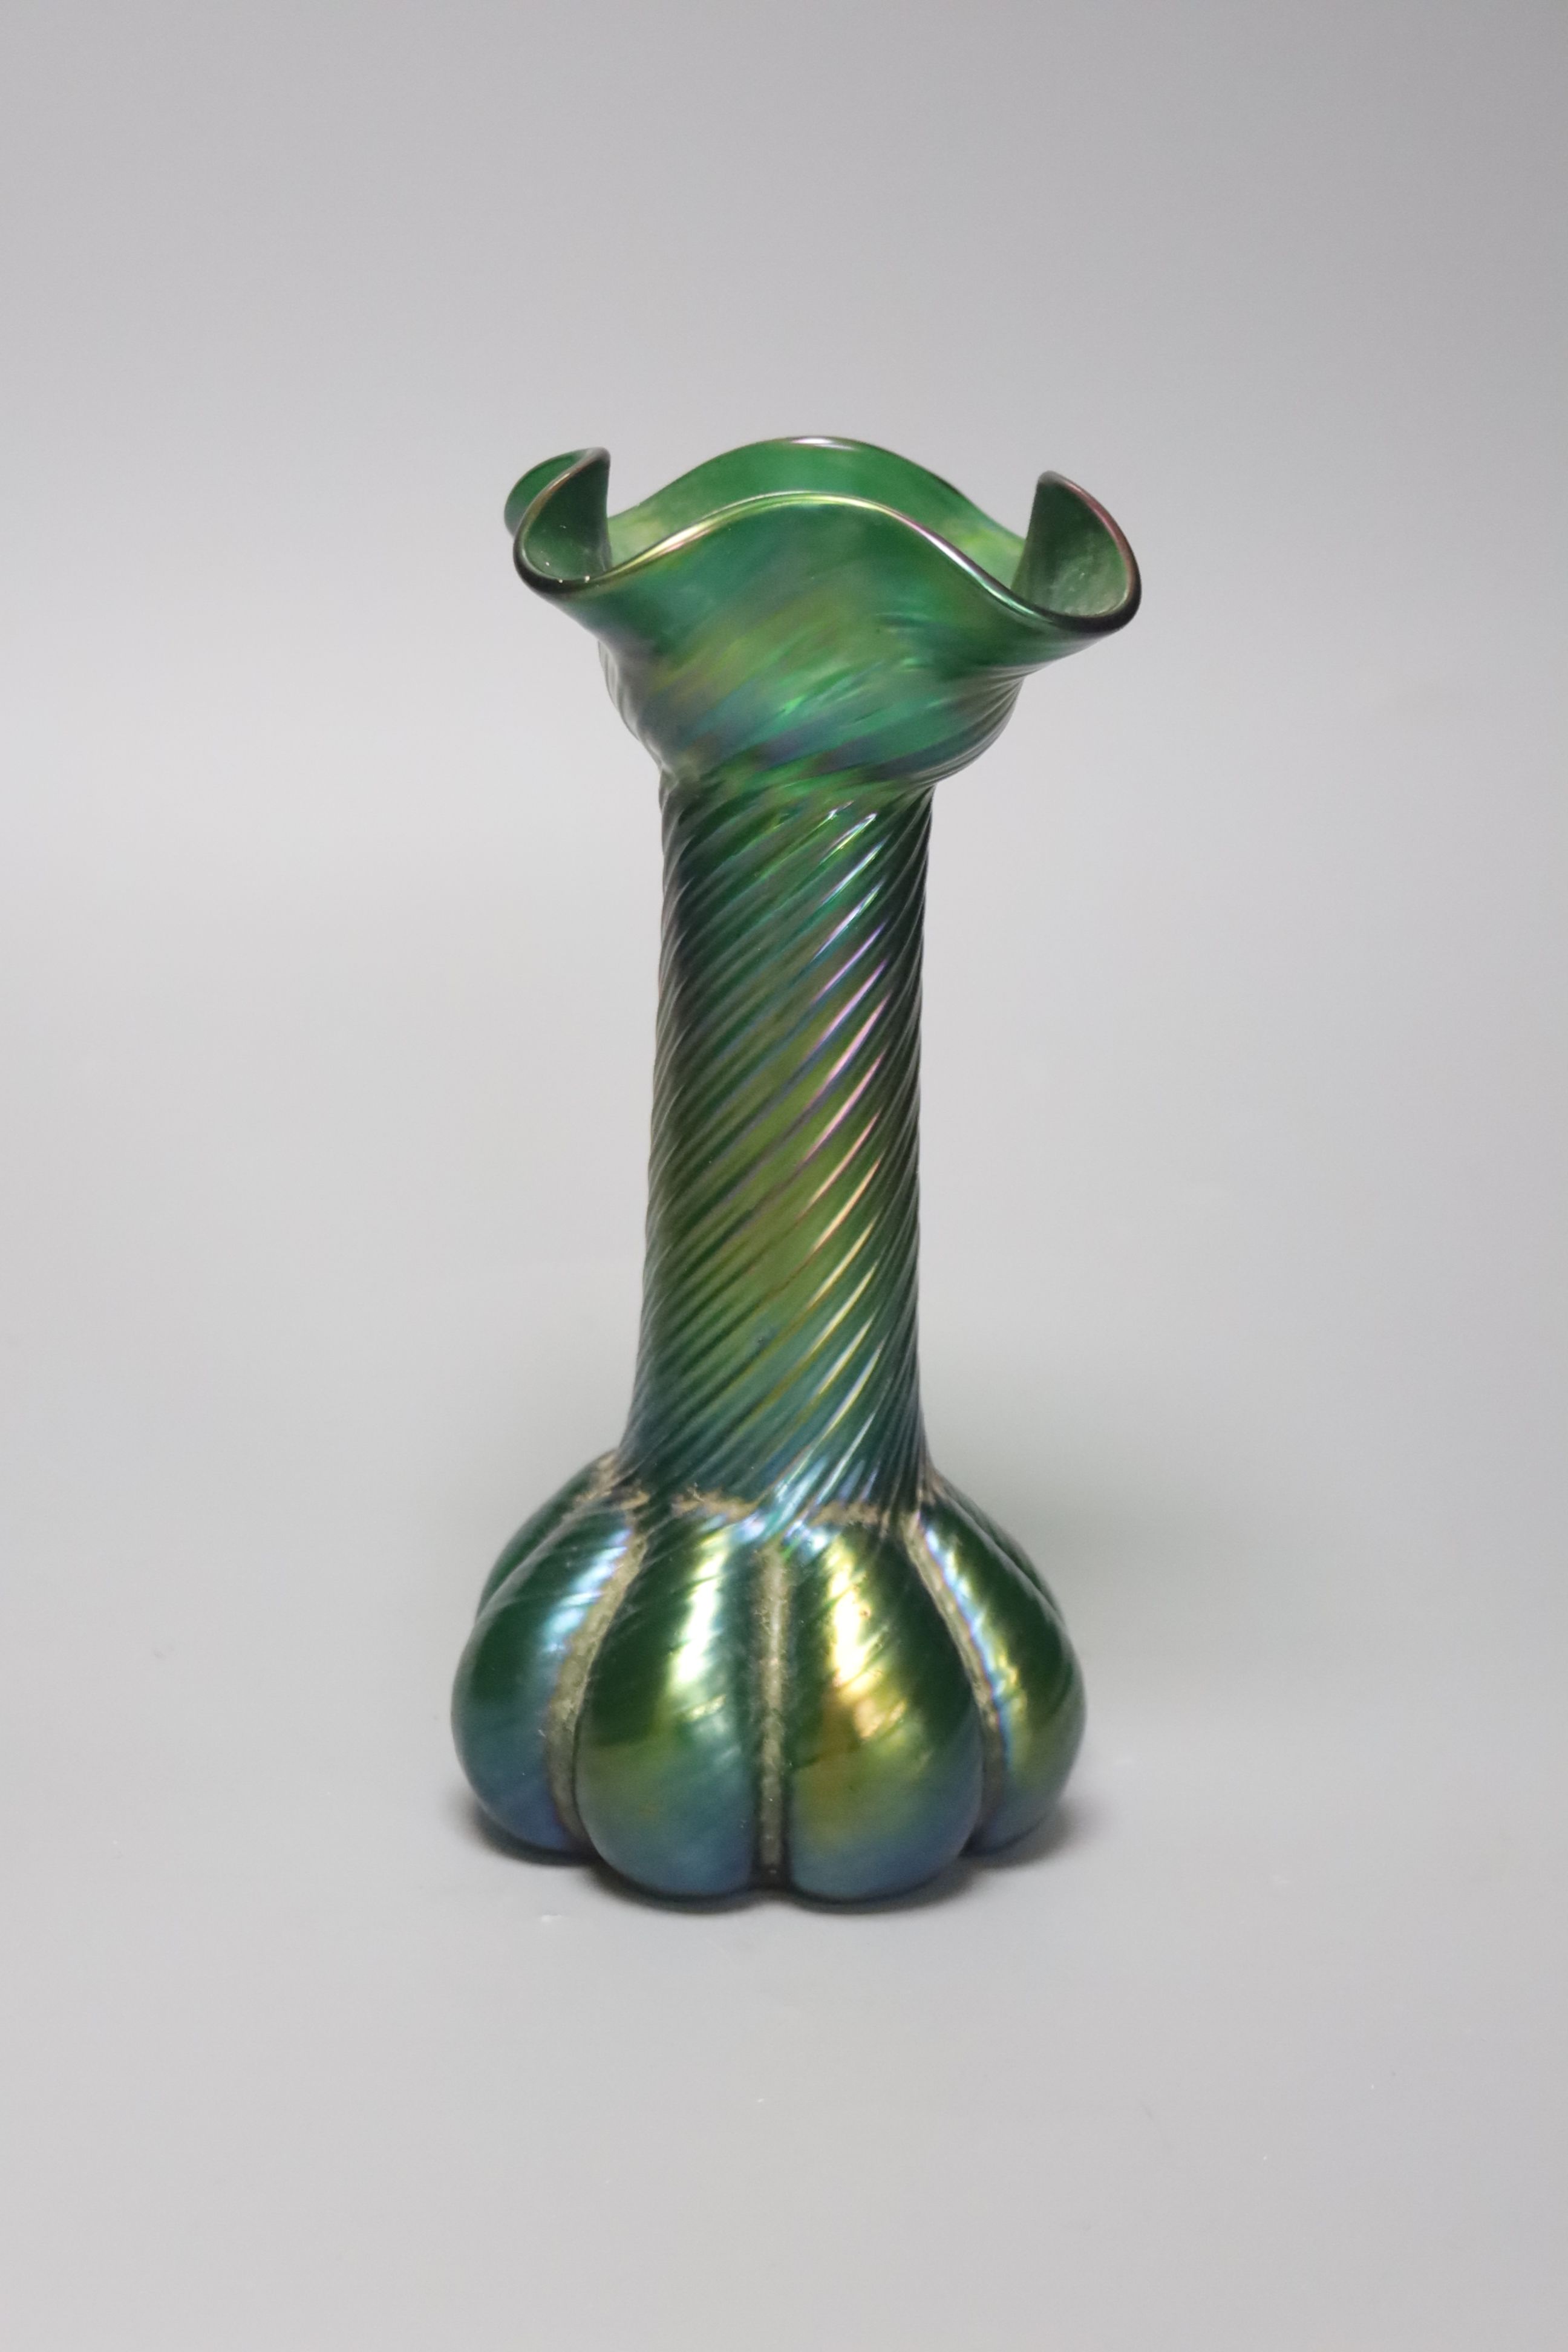 A Loetz style lustre glass vase, height 21cm